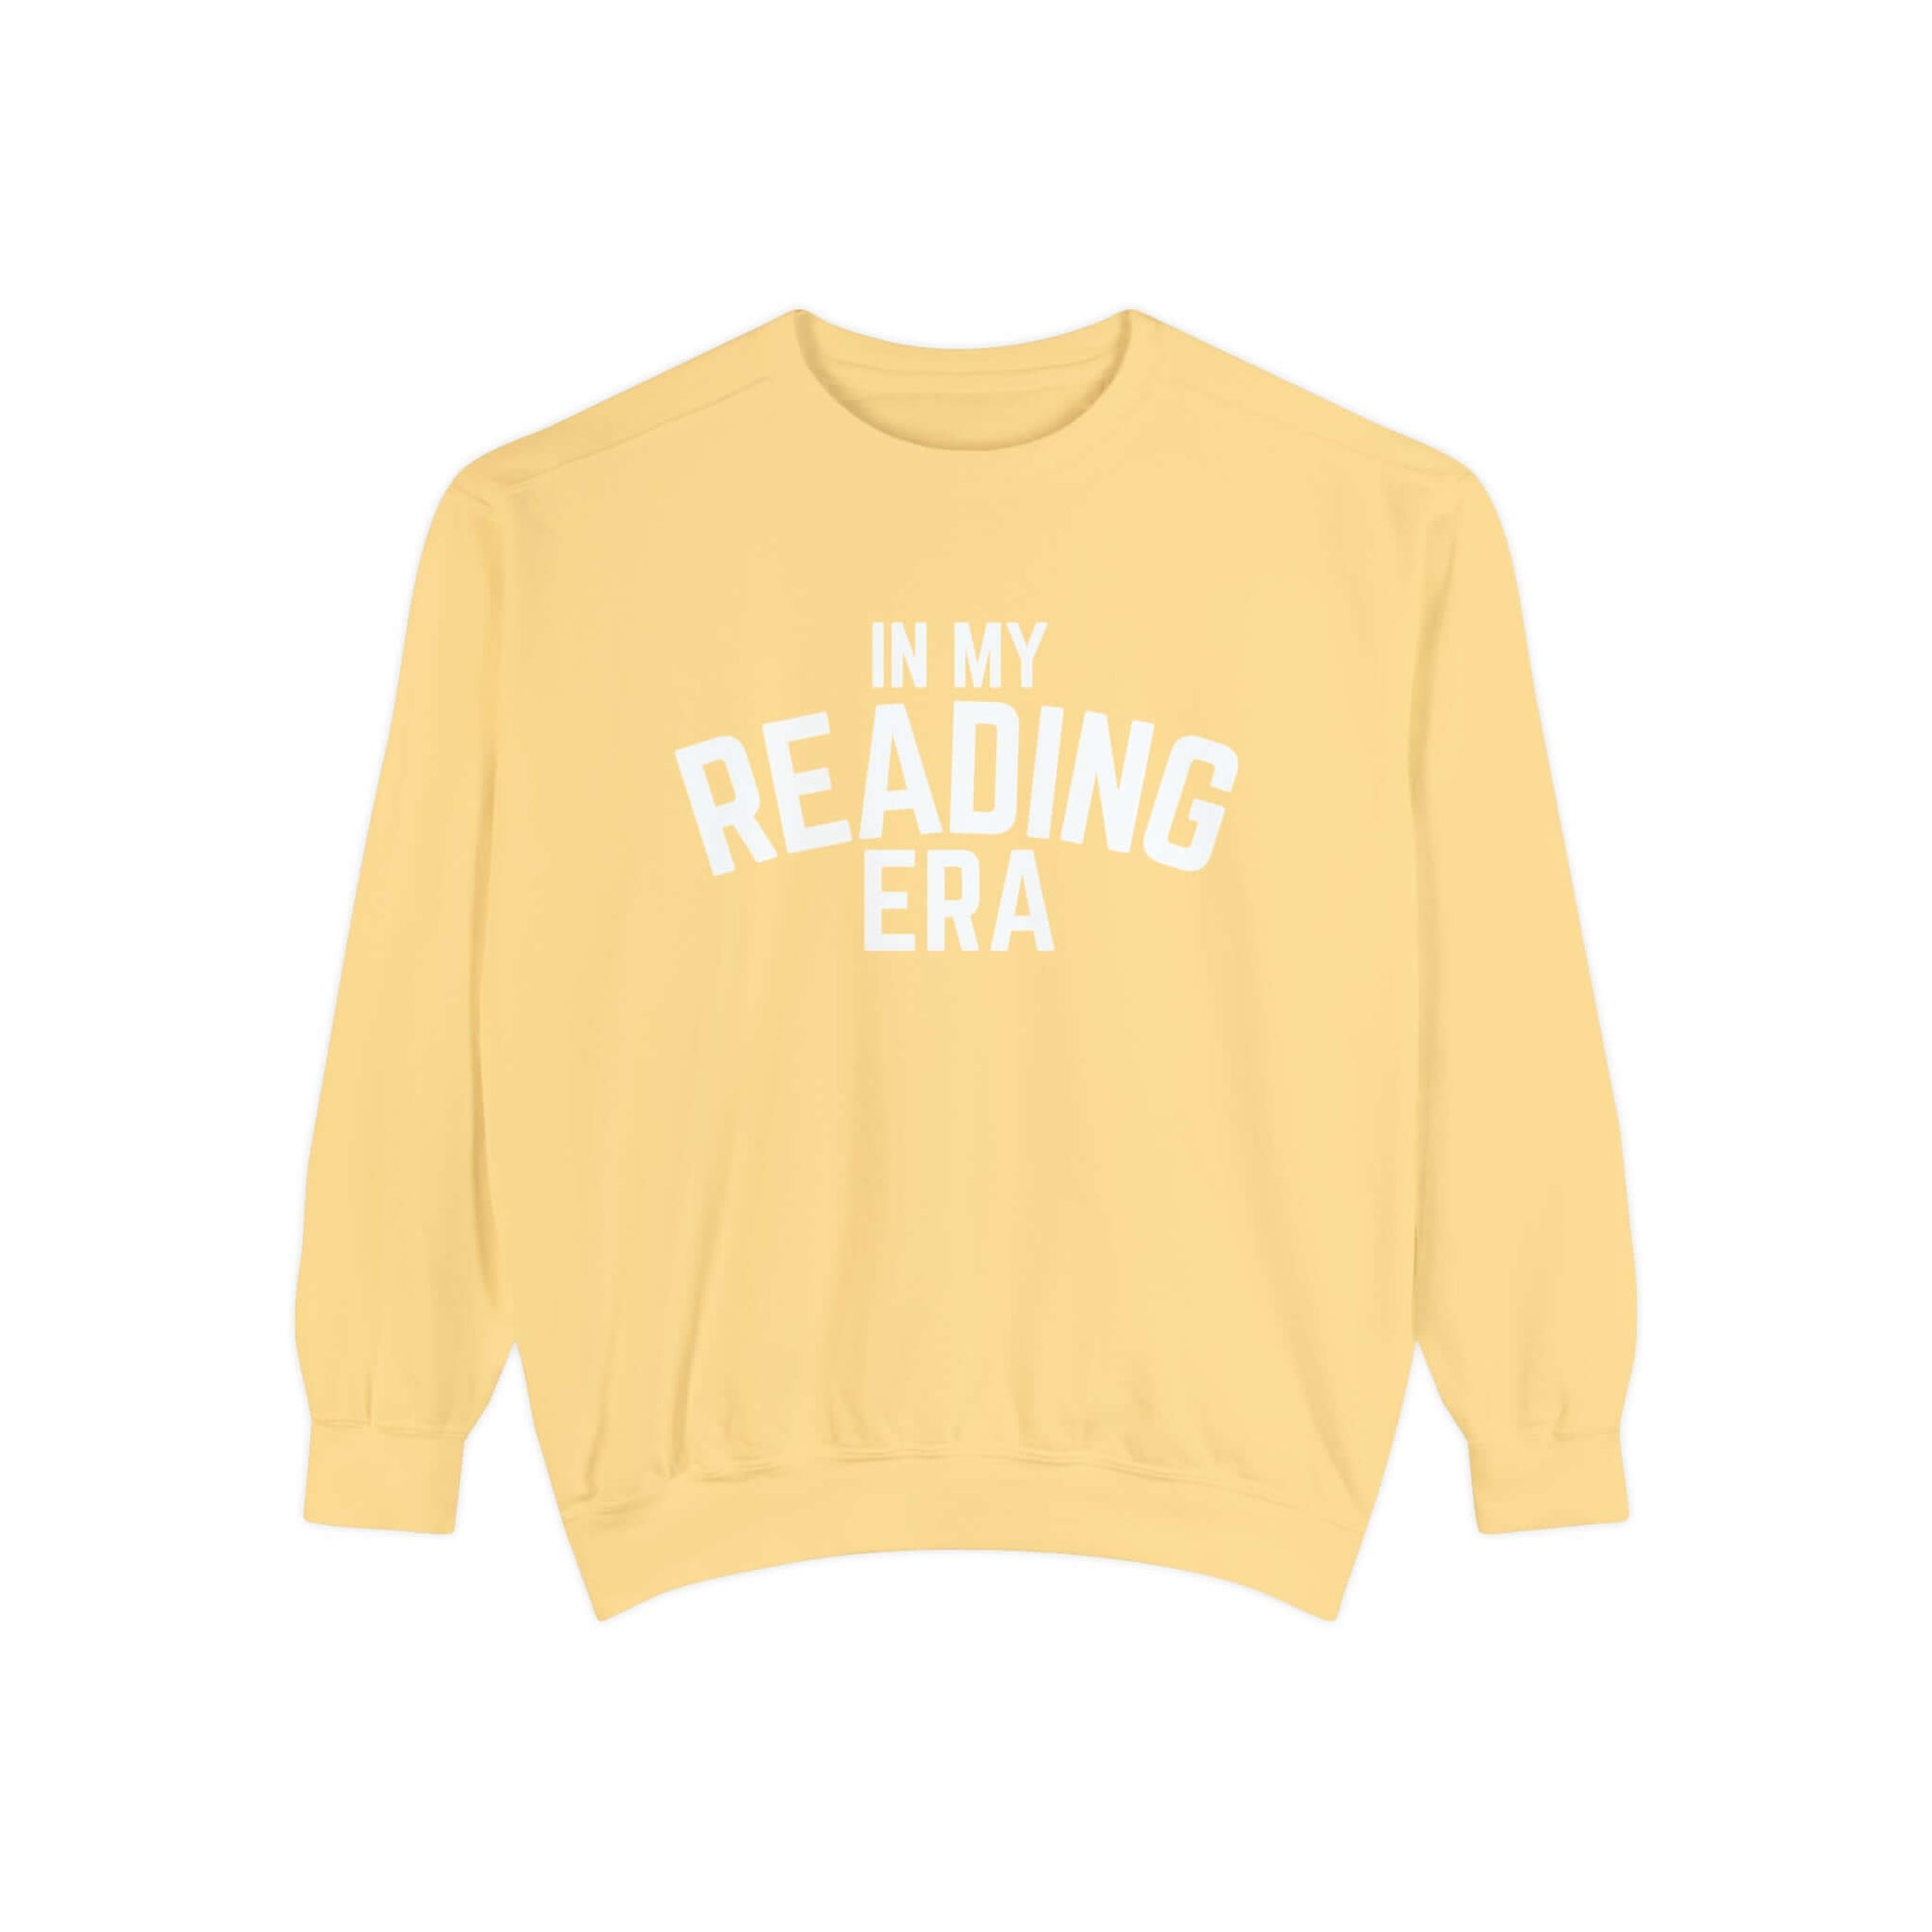 In My Reading Era Sweatshirt (White Text)